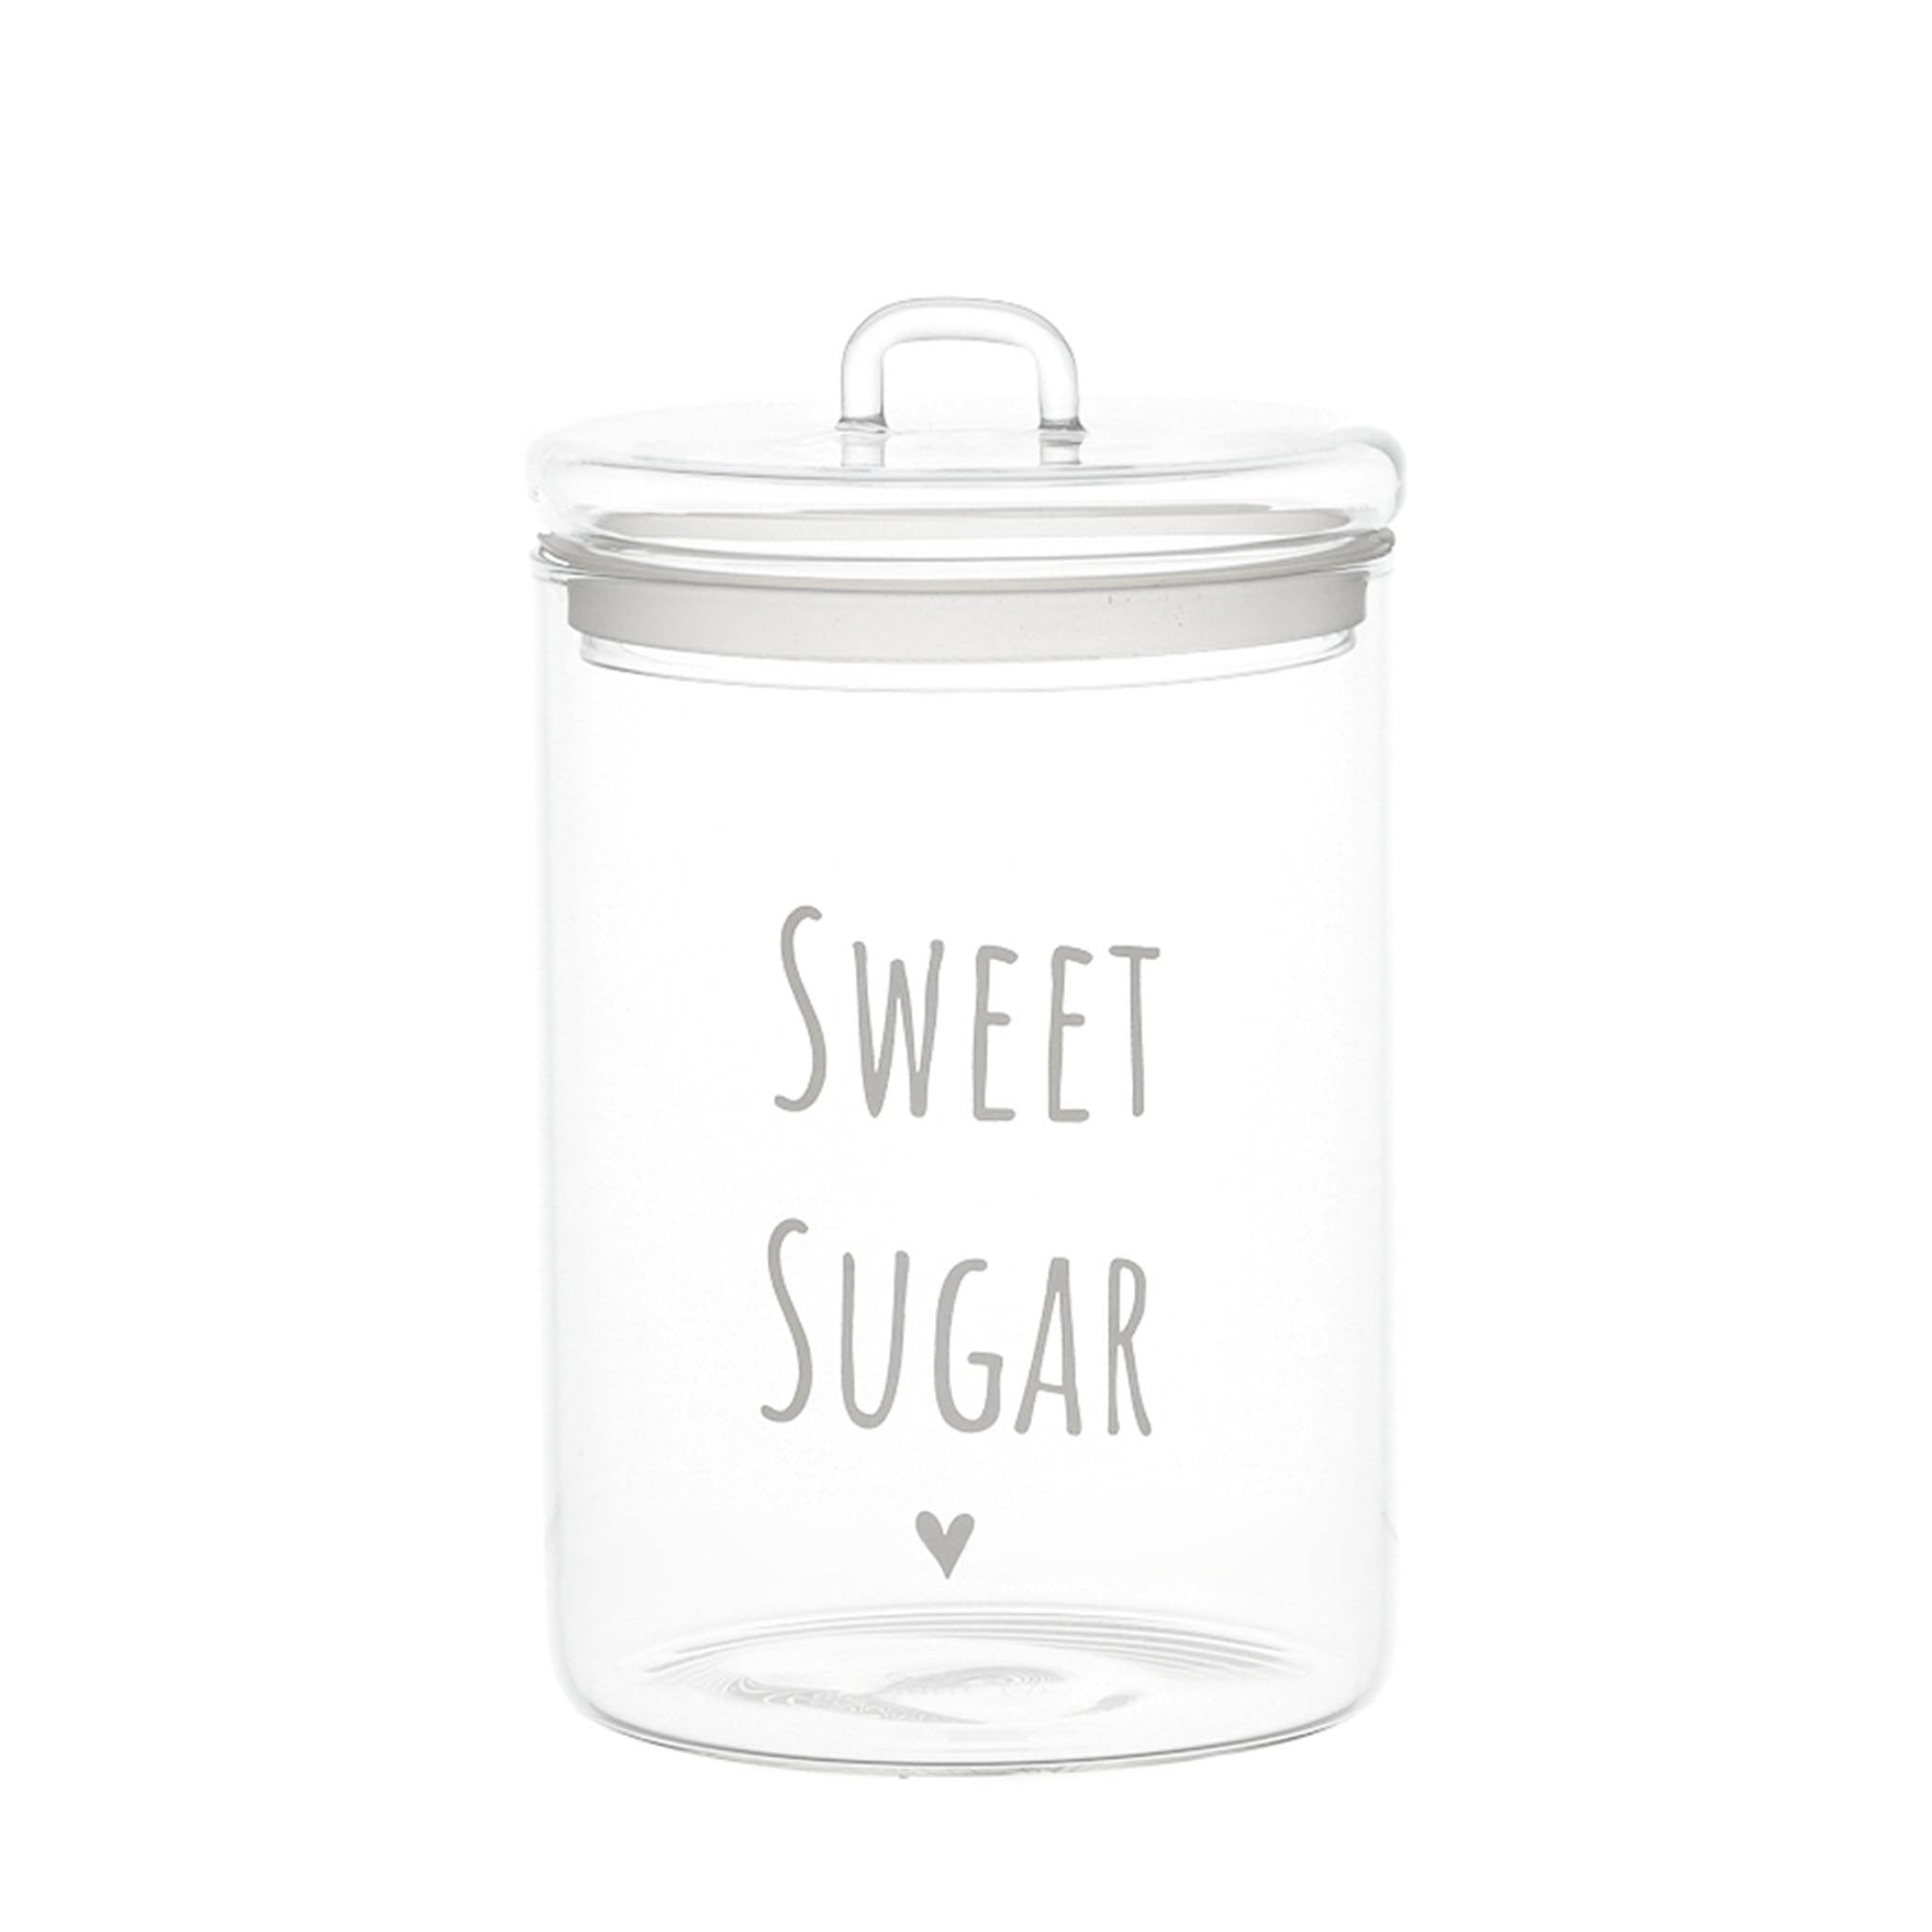 Süßes Zuckerglas